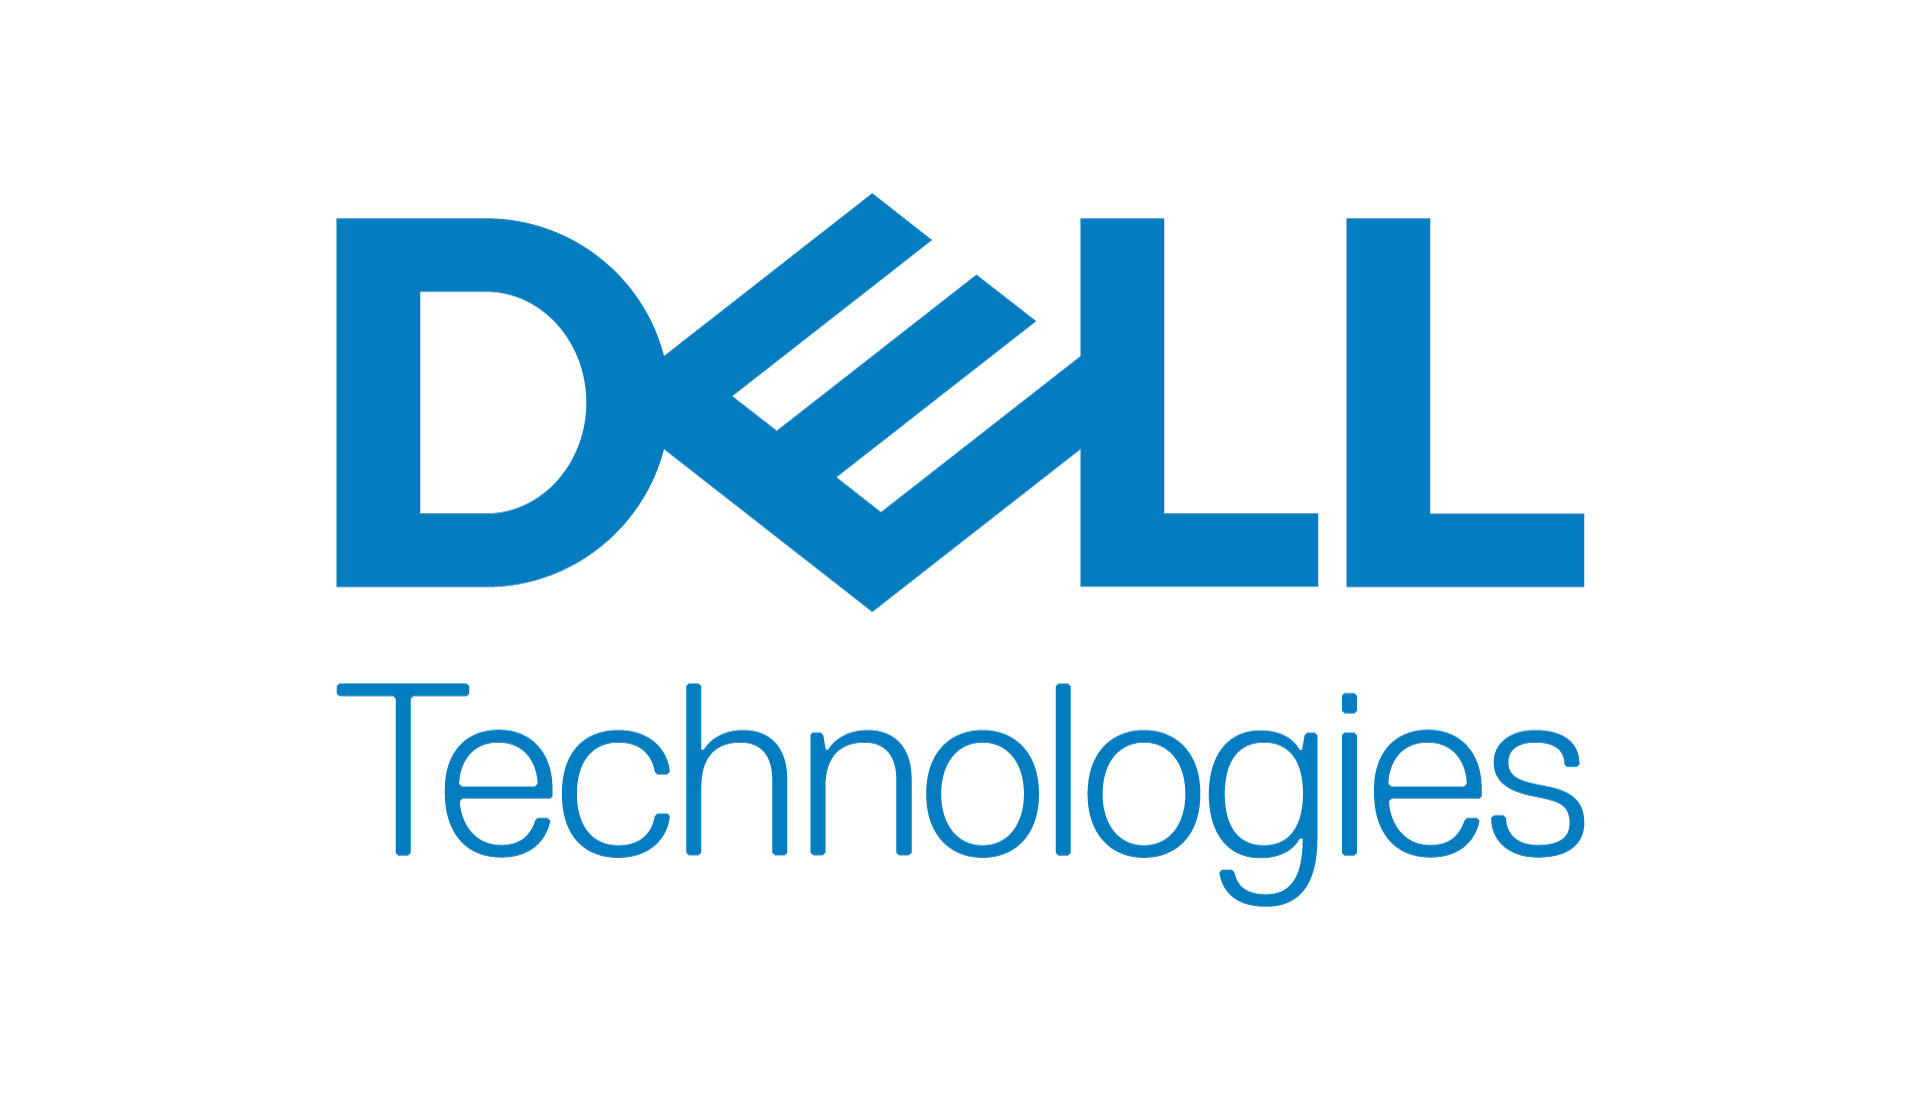 logo Dell Technologies